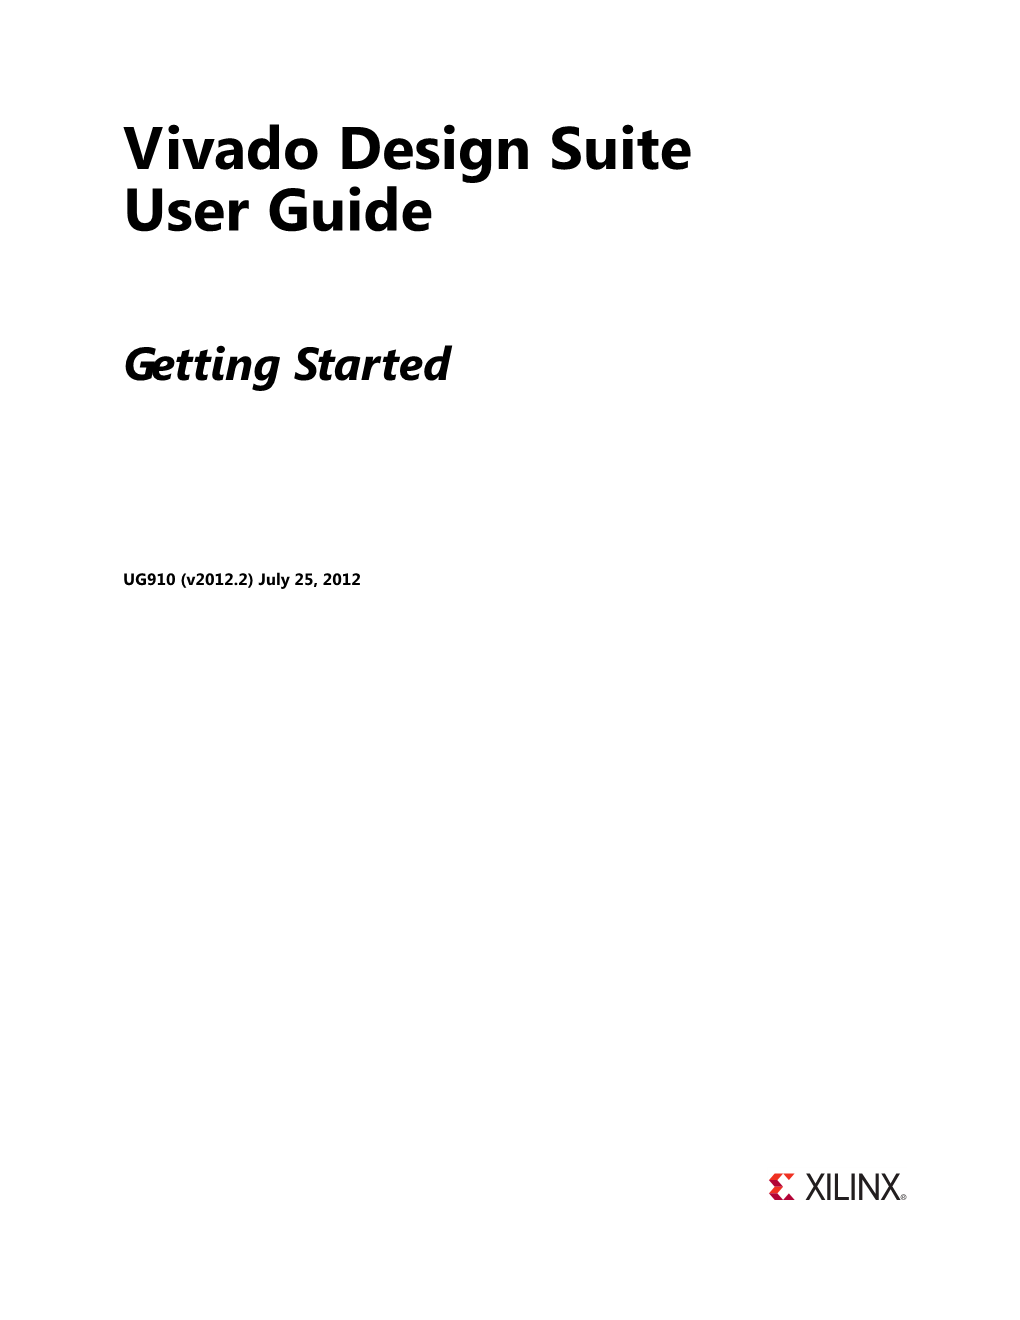 Xilinx Vivado Design Suite User Guide: Getting Started (UG910)